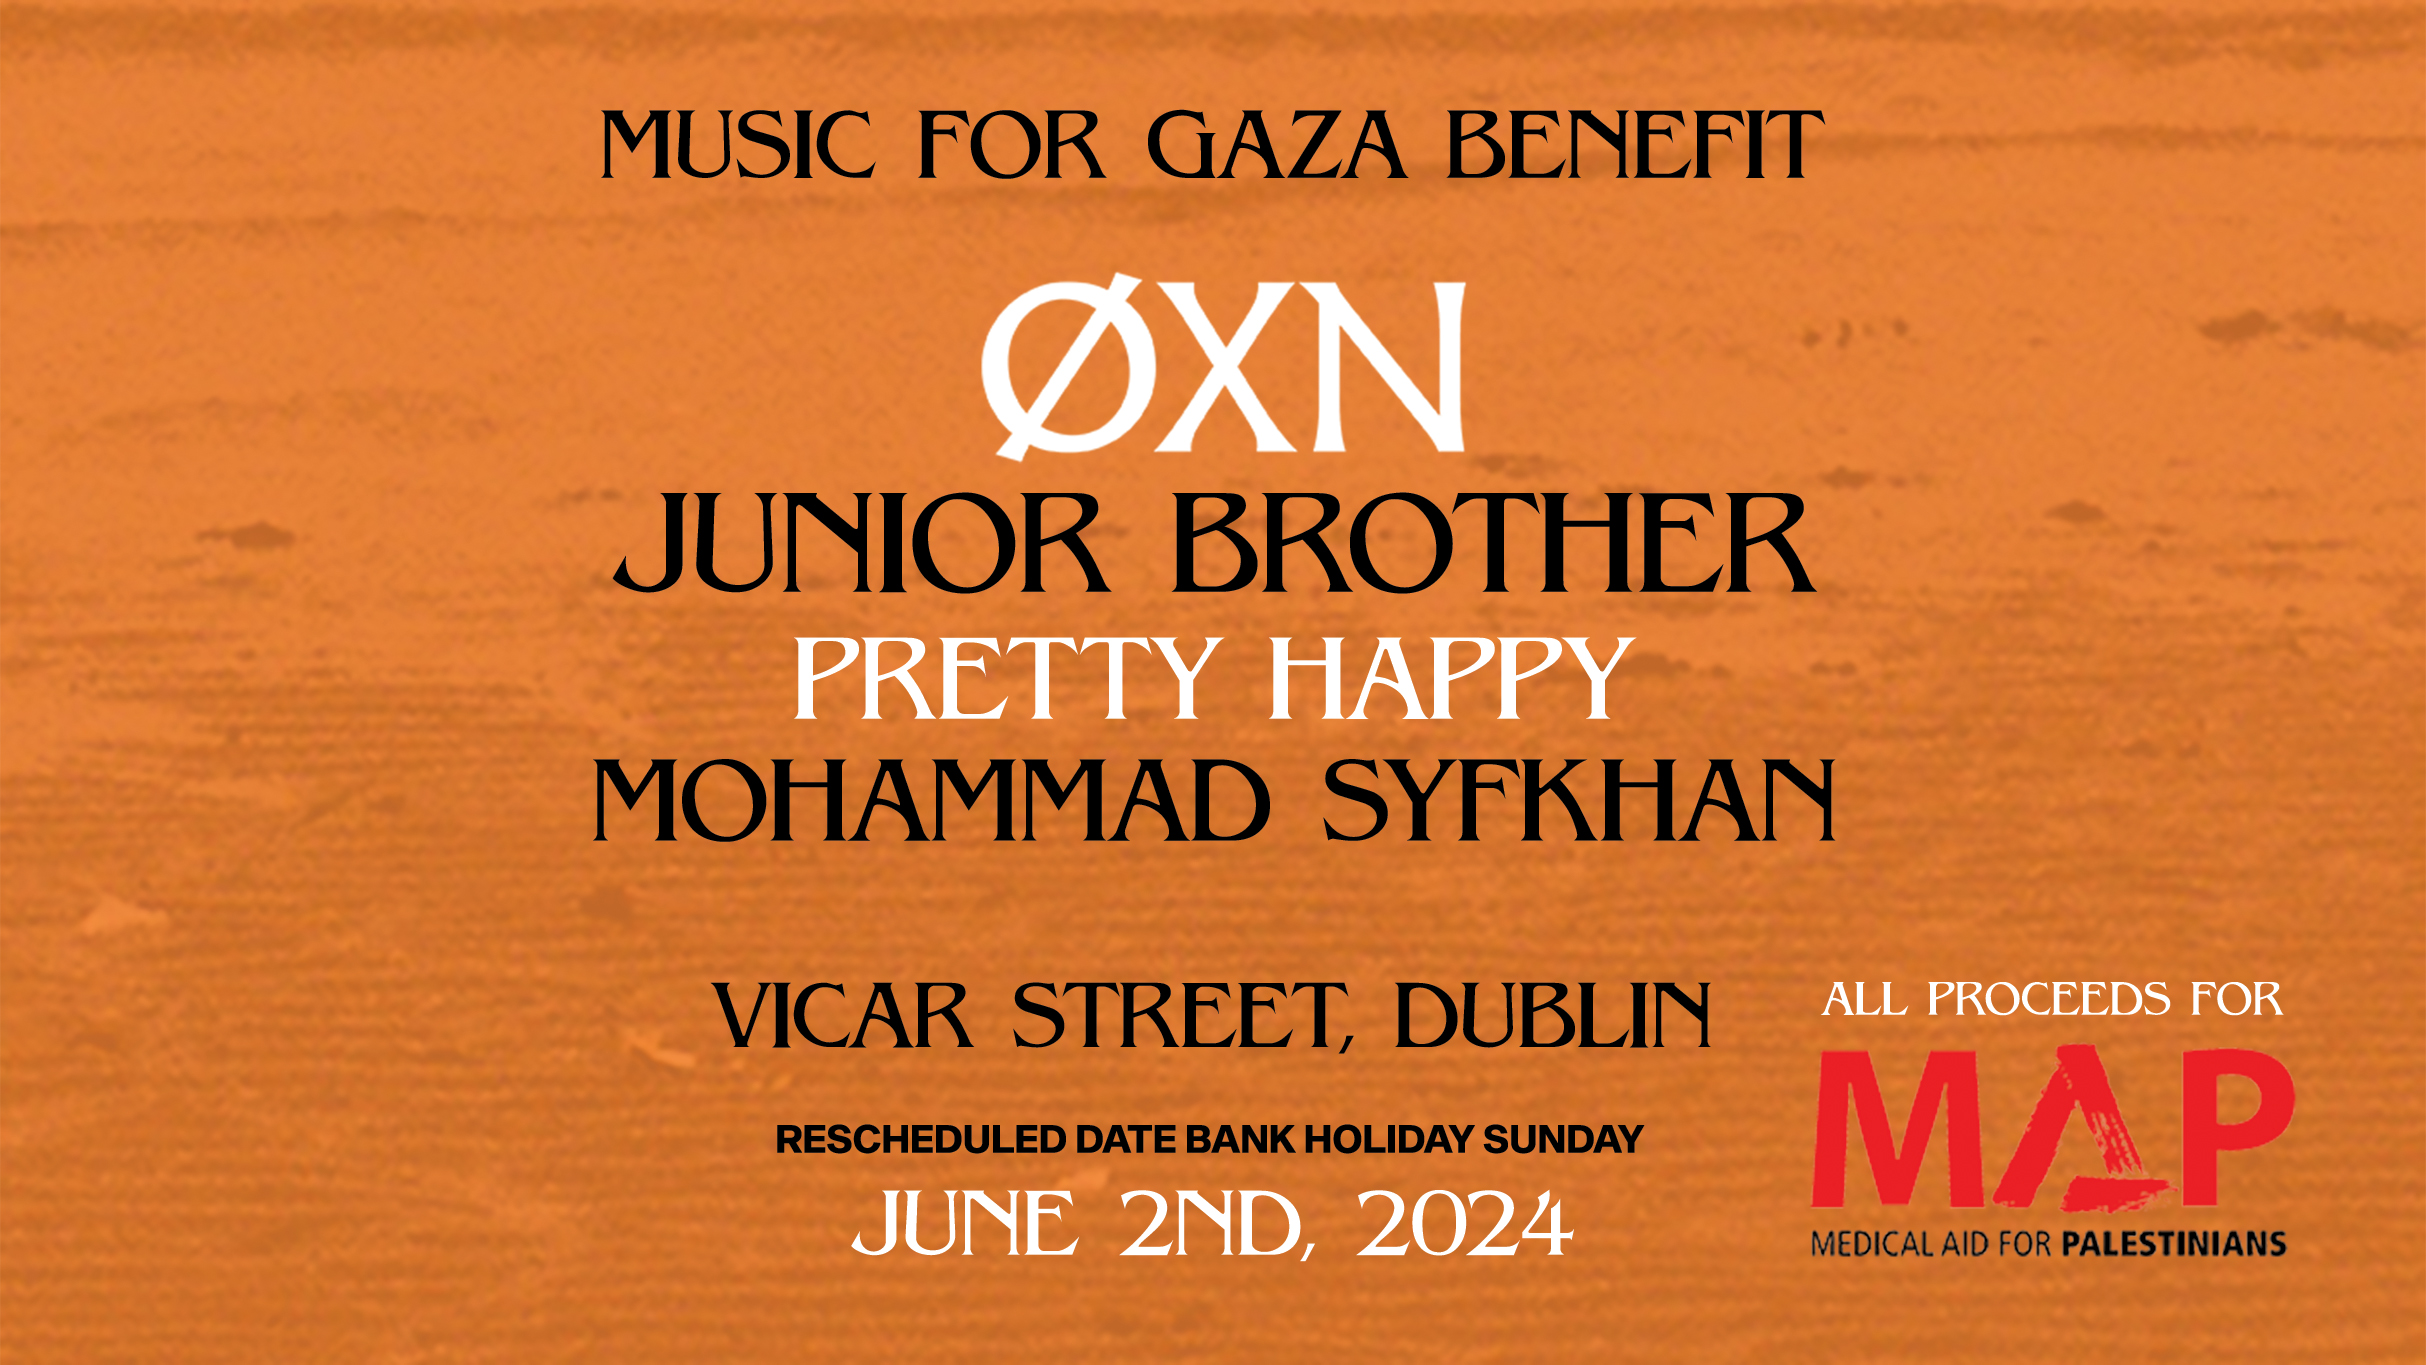 Gig for Gaza : Øxn, Junior Brother, Pretty Happy & More